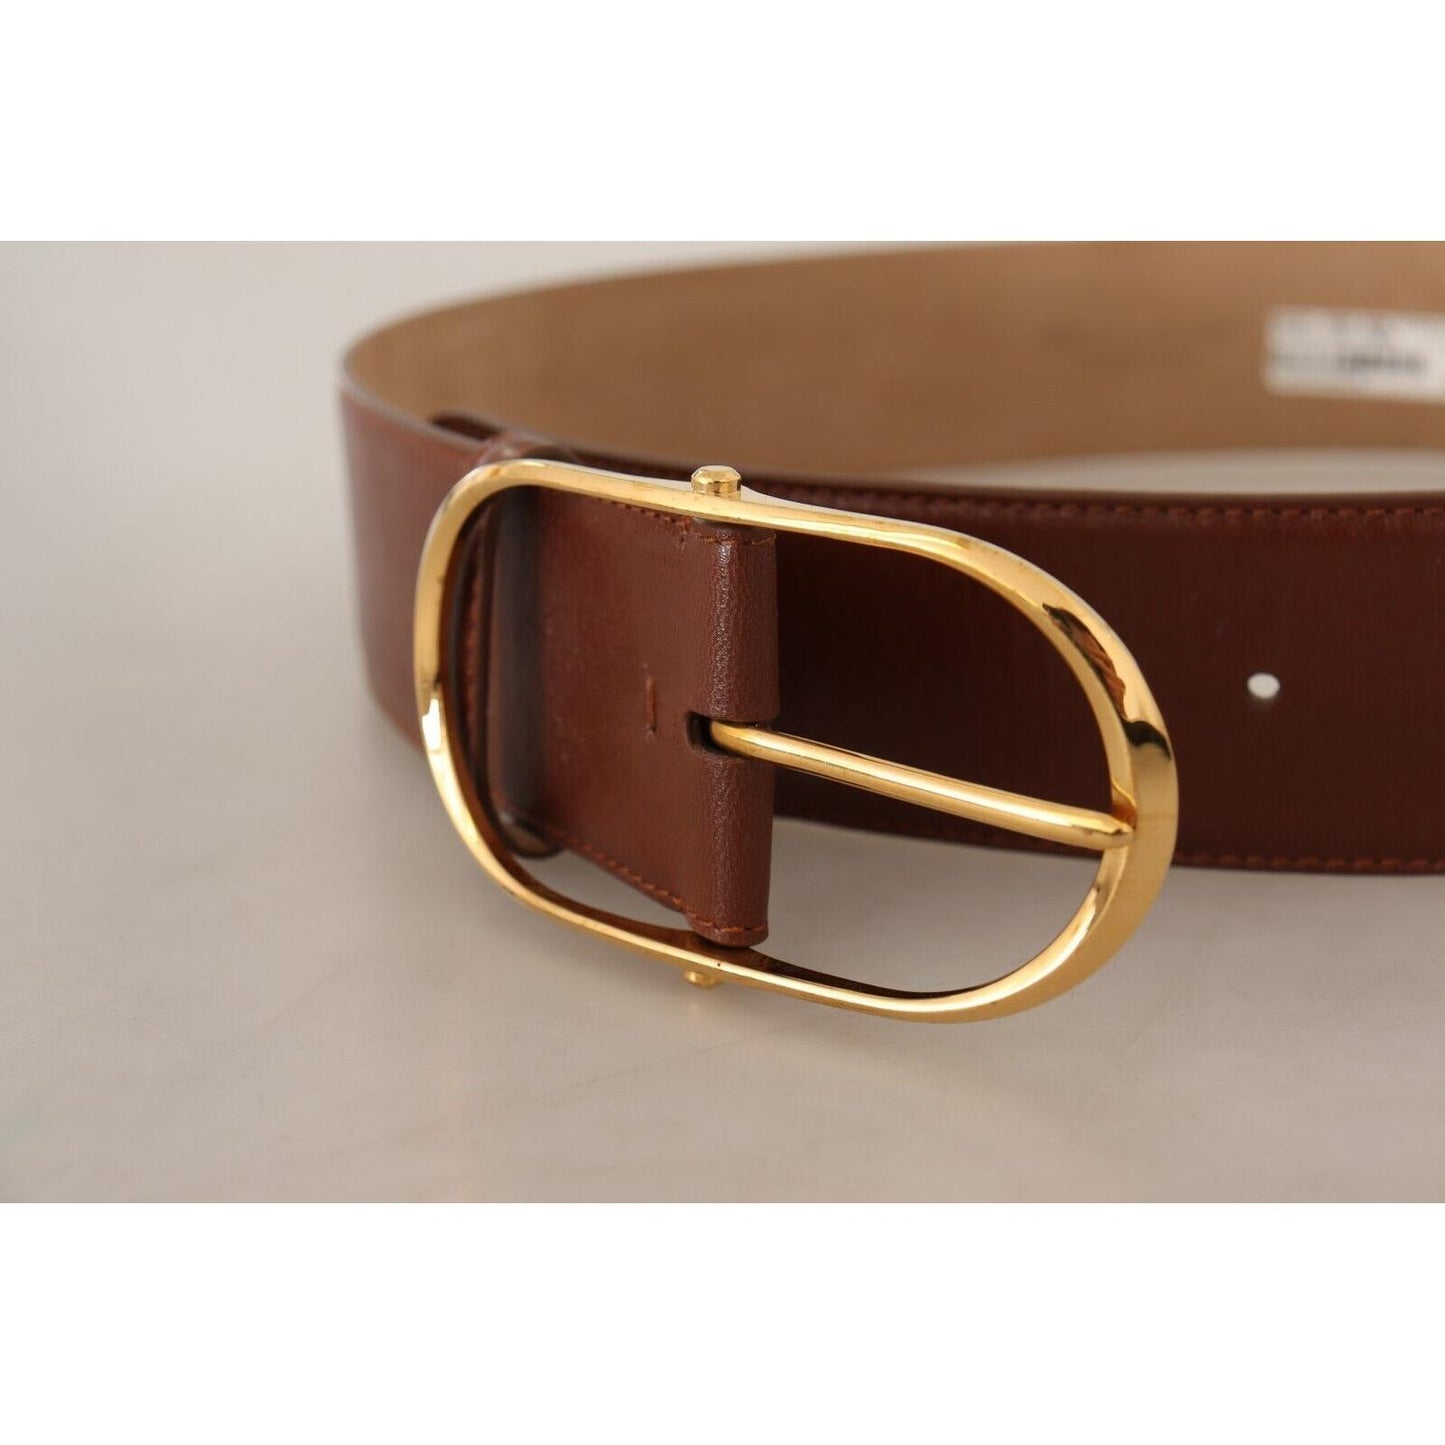 Dolce & Gabbana Elegant Brown Leather Belt with Gold Buckle brown-leather-gold-metal-oval-buckle-belt-2